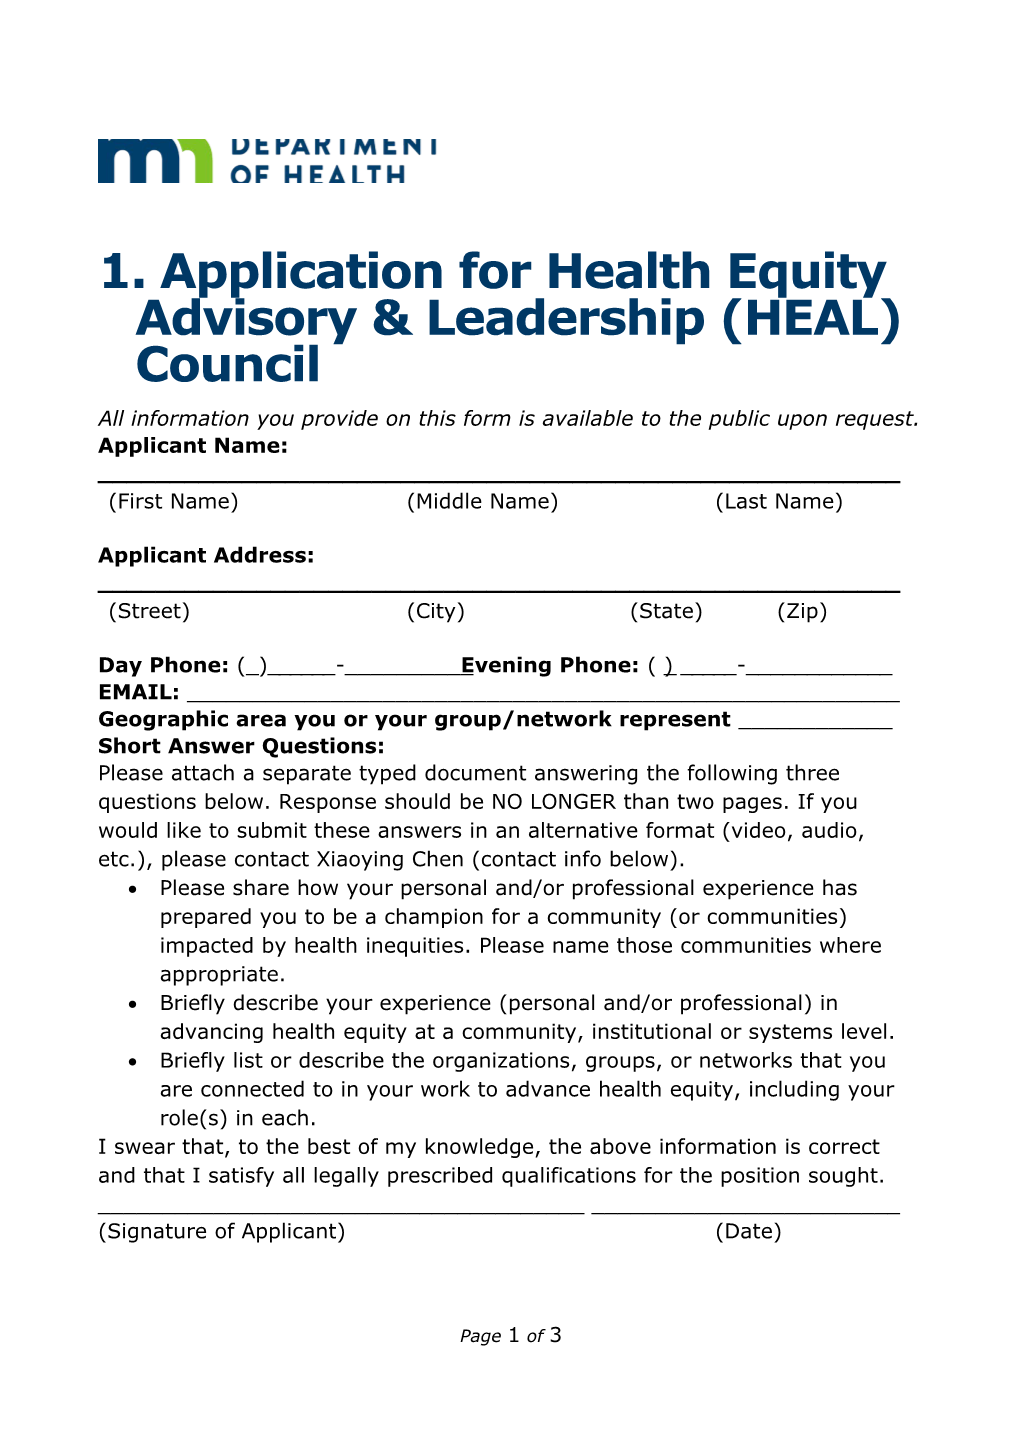 Application for Health Equity Advisory & Leadership (HEAL) Council